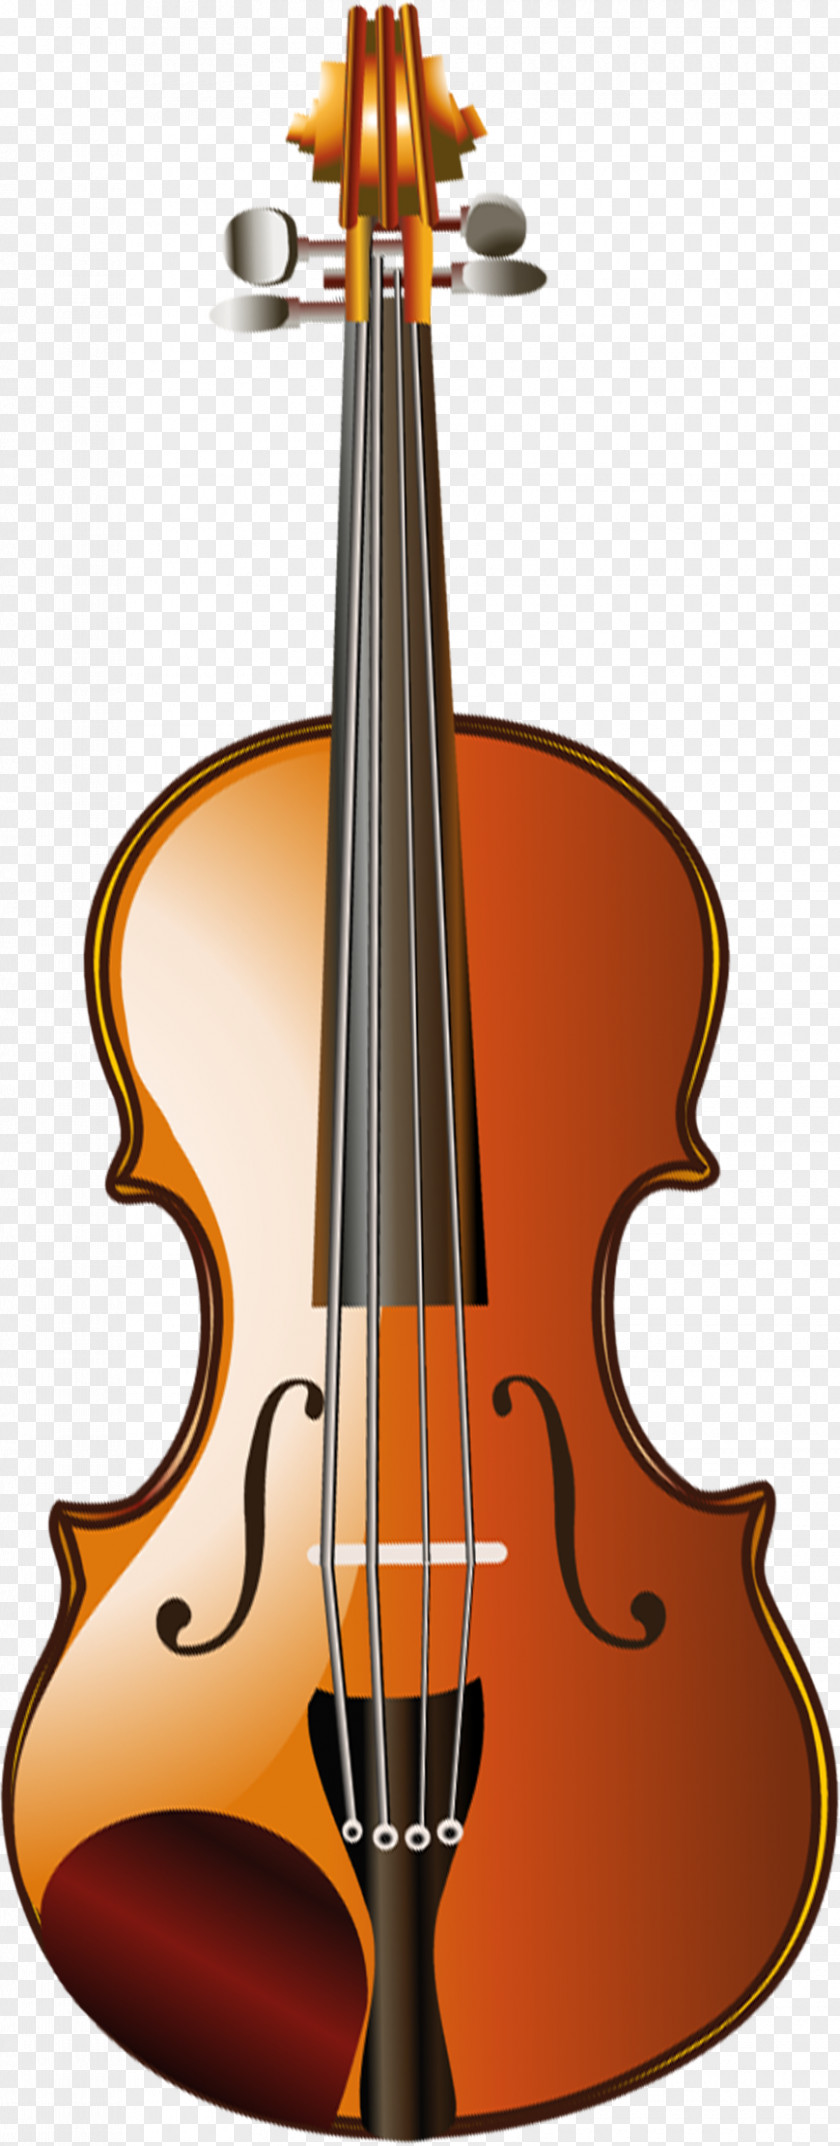 Musical Instruments Violin Saxophone PNG